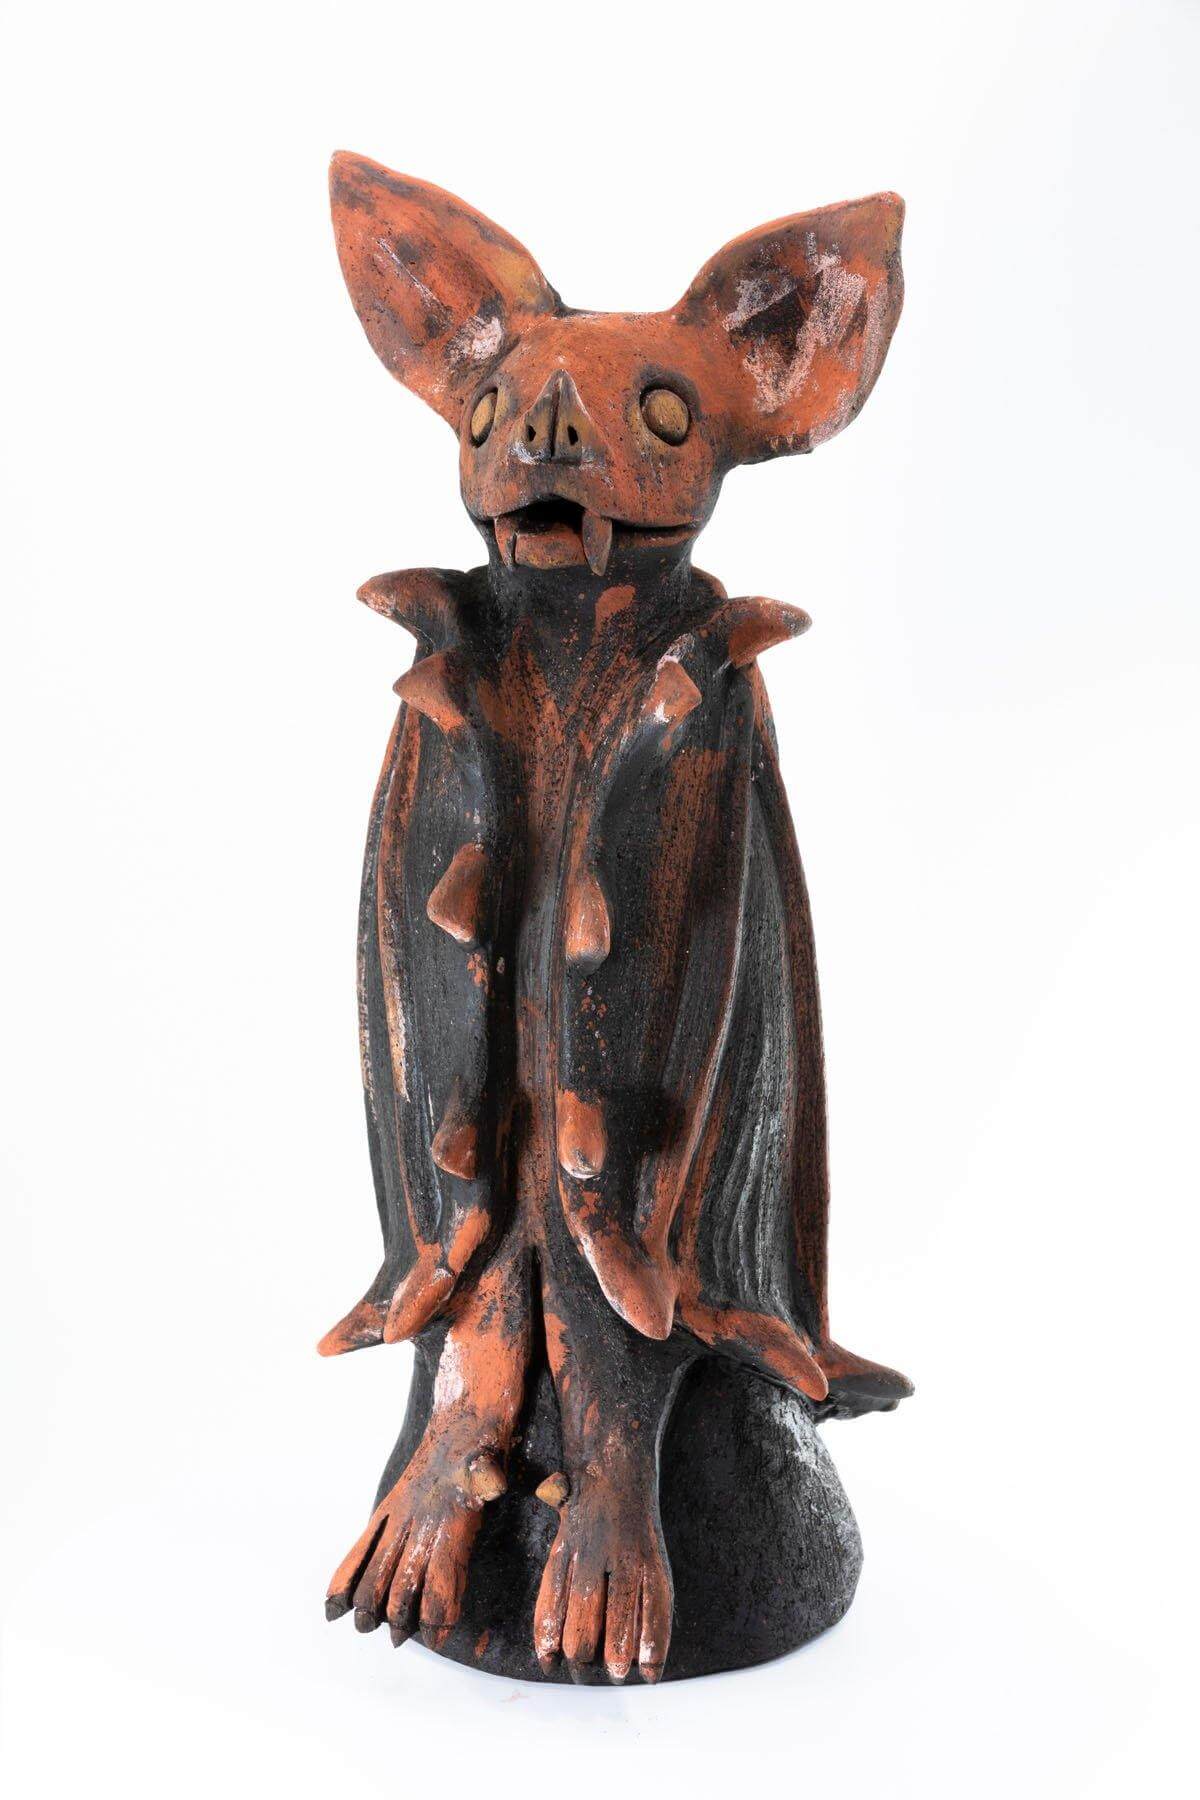 Pollinator Bat Sculpture by Adrián Martínez Alarzón - Wool+Clay